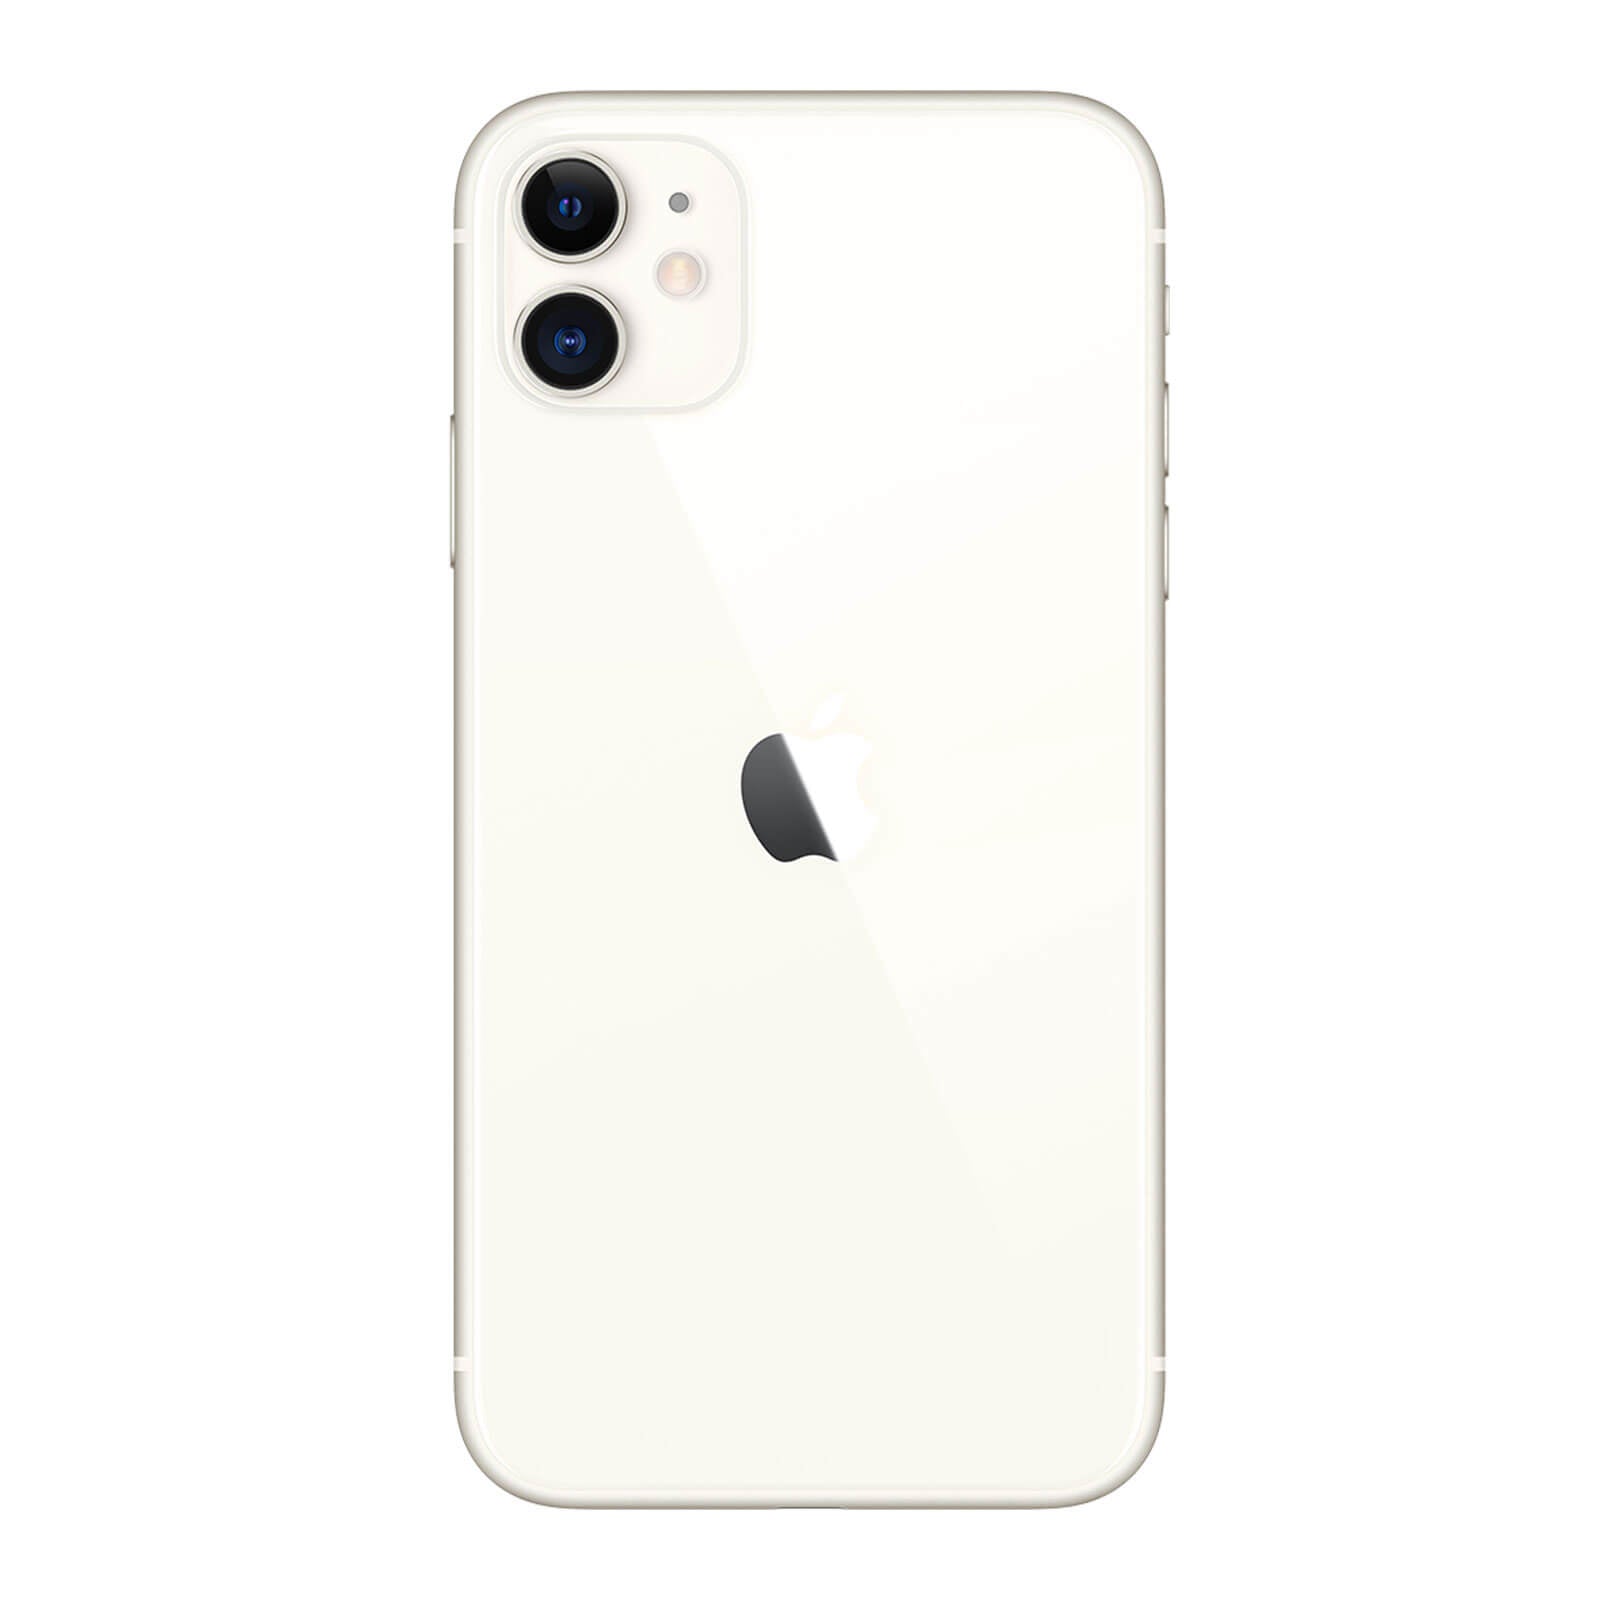 Apple iPhone 11 256GB White Very Good - Unlocked